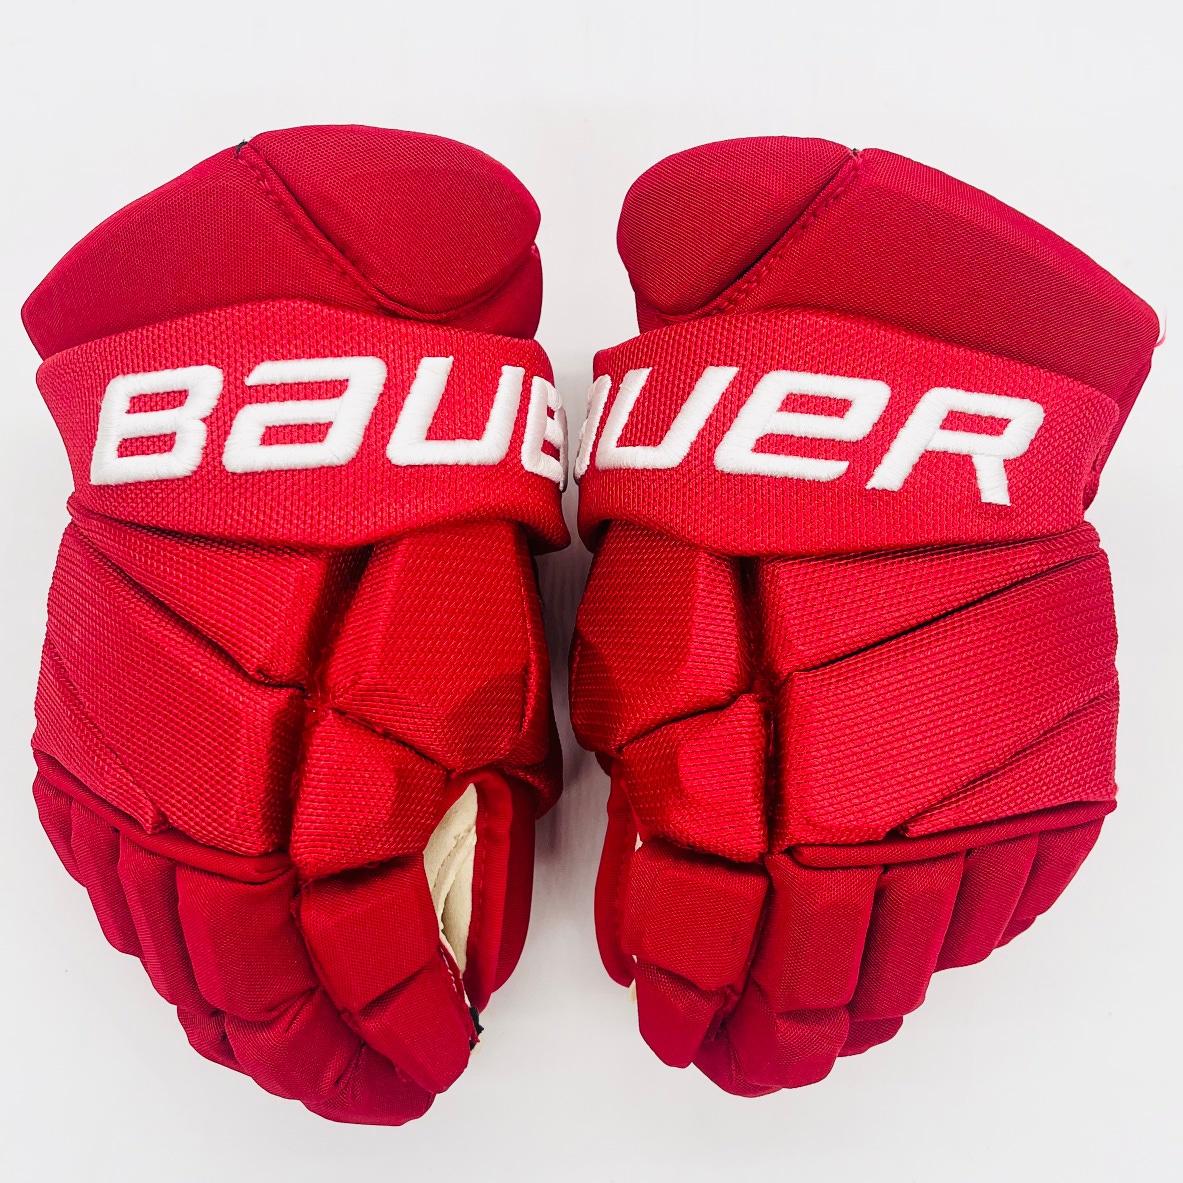 New Bauer Vapor 2X Pro Hockey Gloves-13"-Single Layer Palms